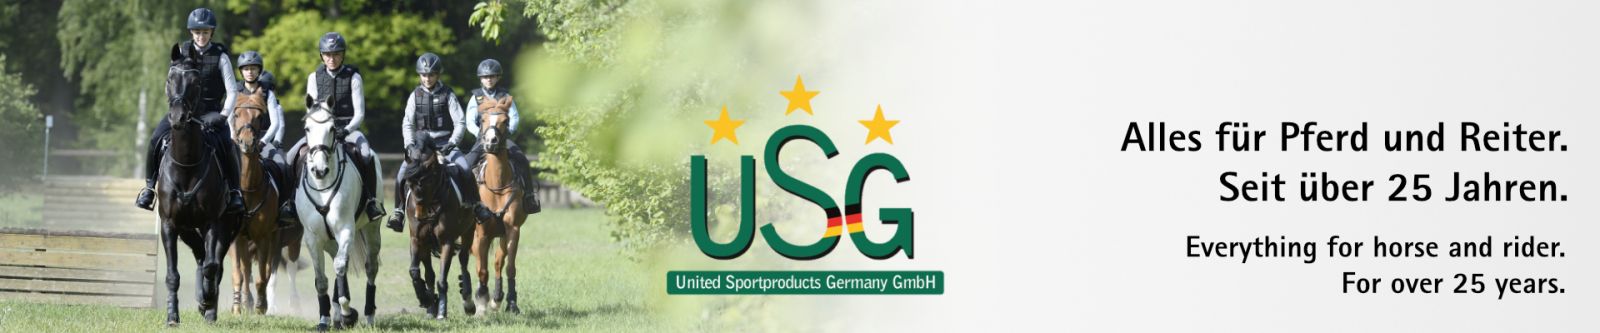 declarations of conformity - USG - United Sportproducts Germany GmbH